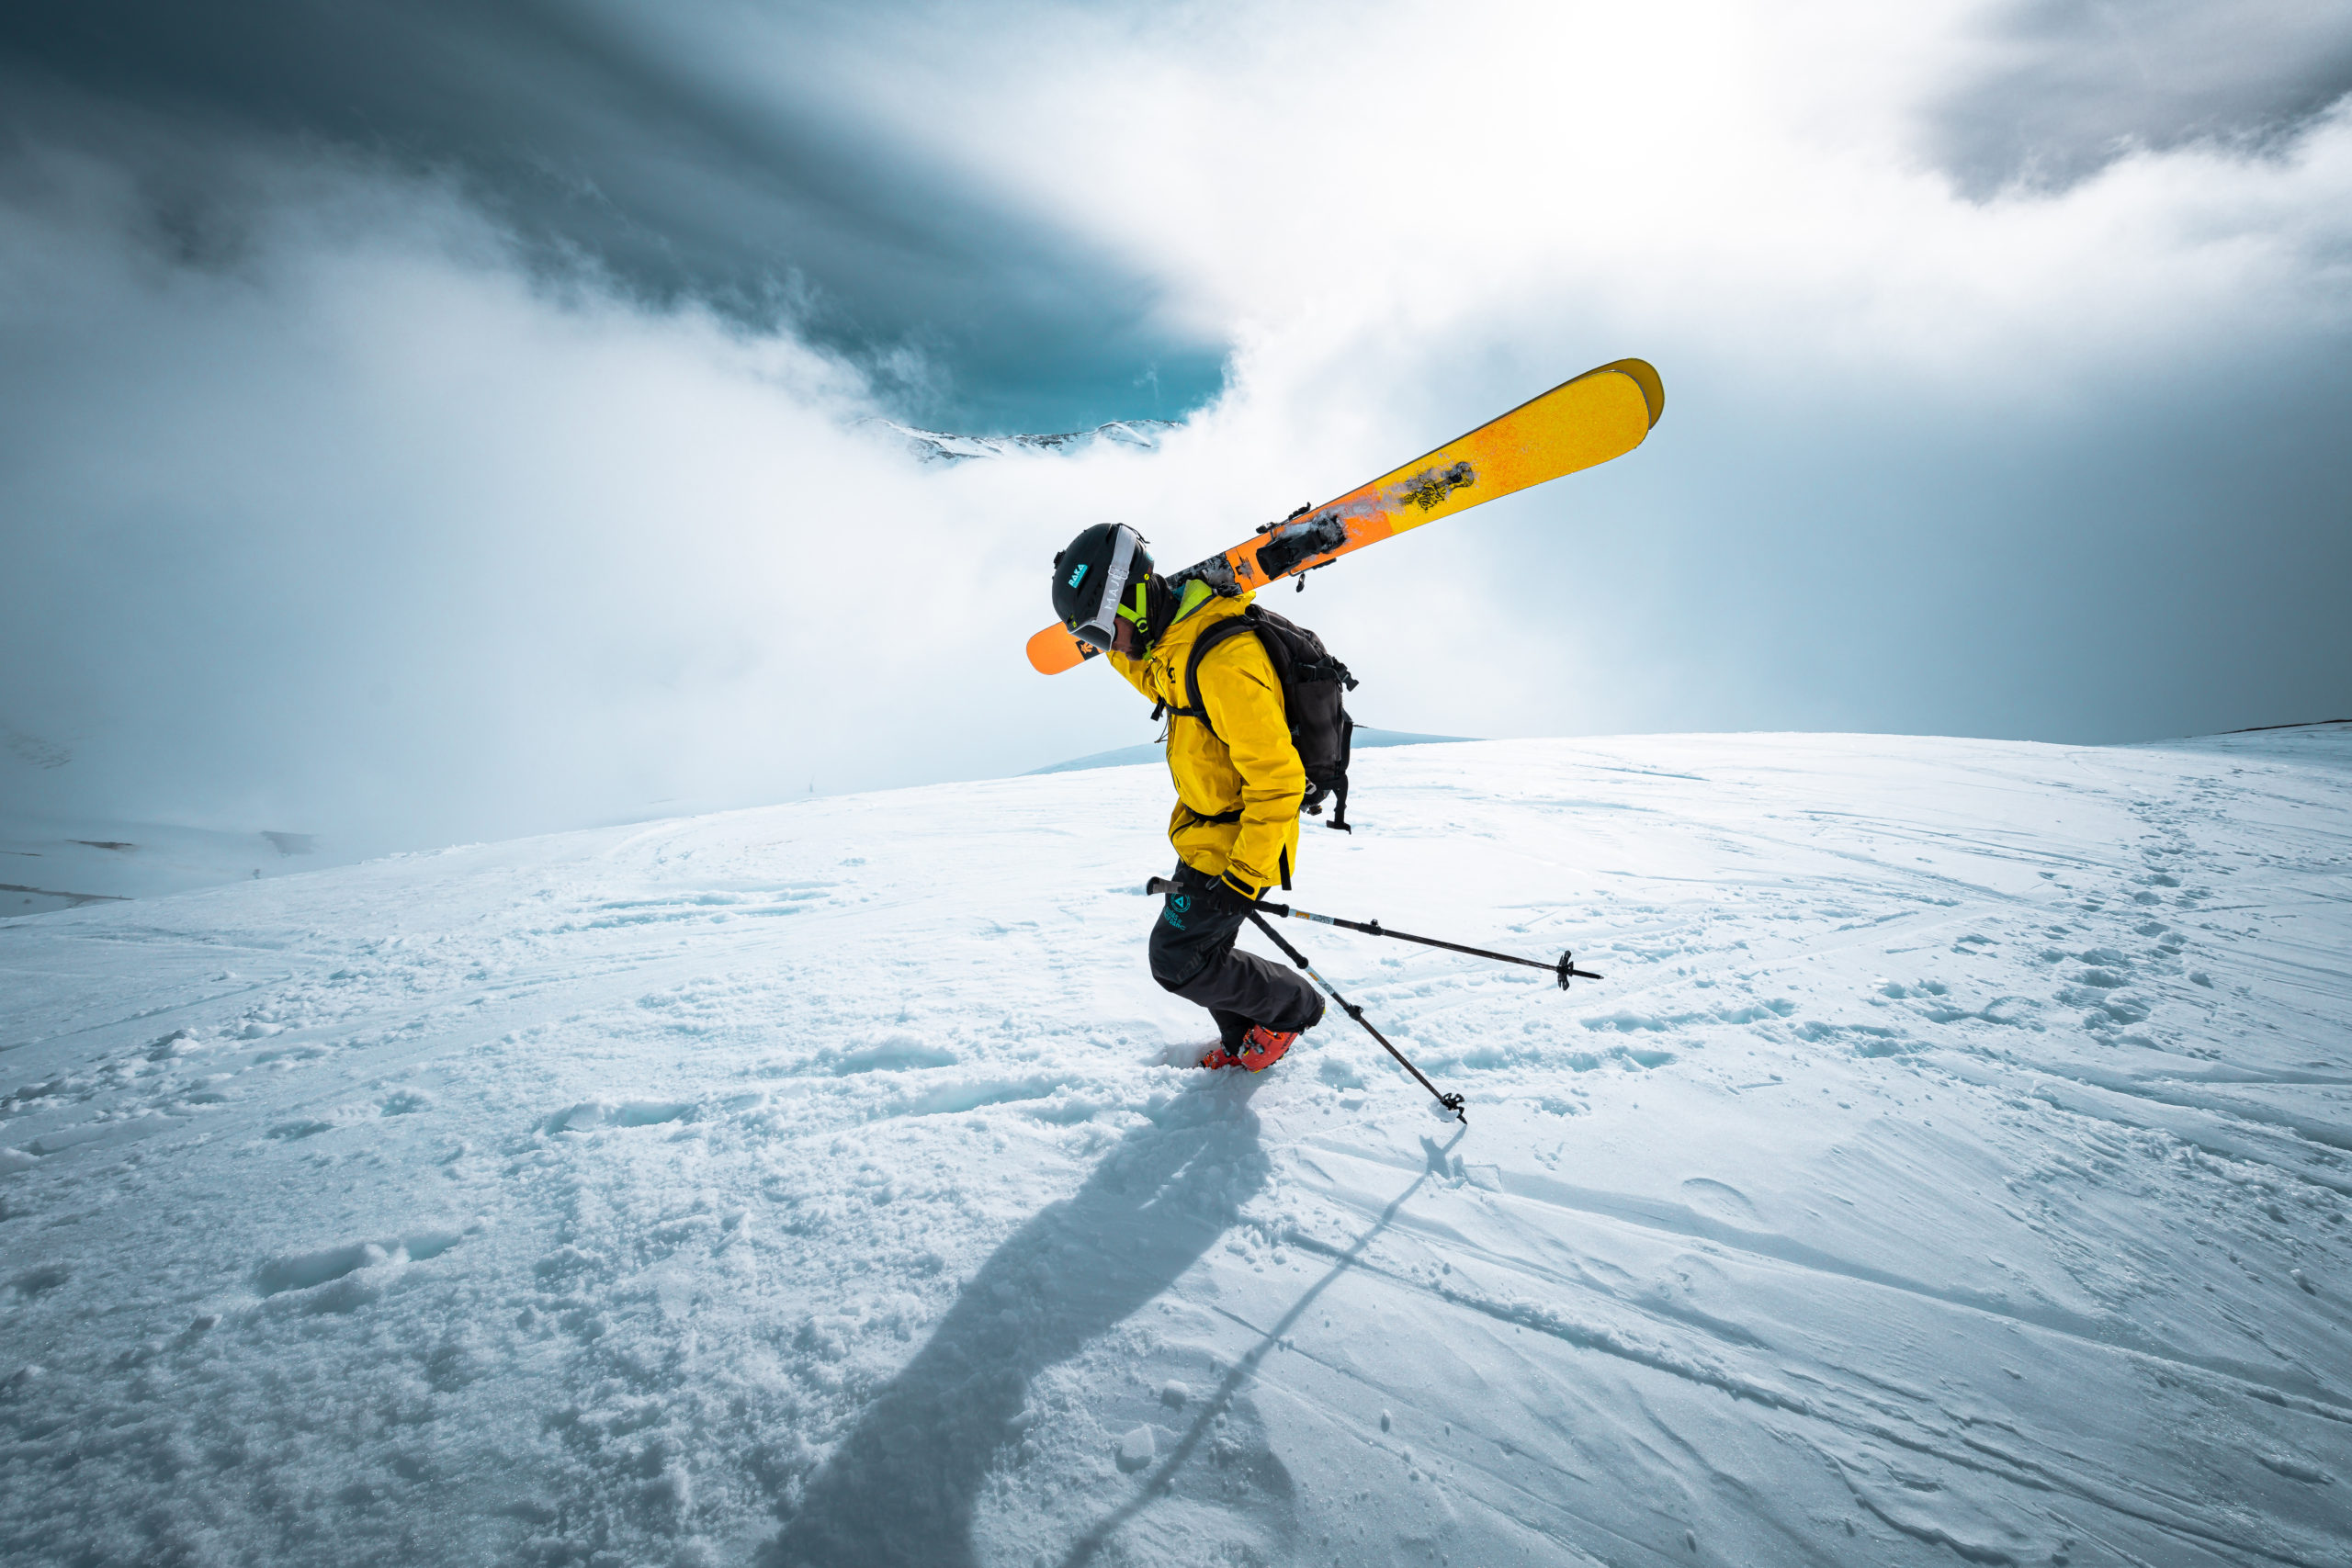 Majesty Skis og Skis 4 Trees – Norwegian Adventure Company